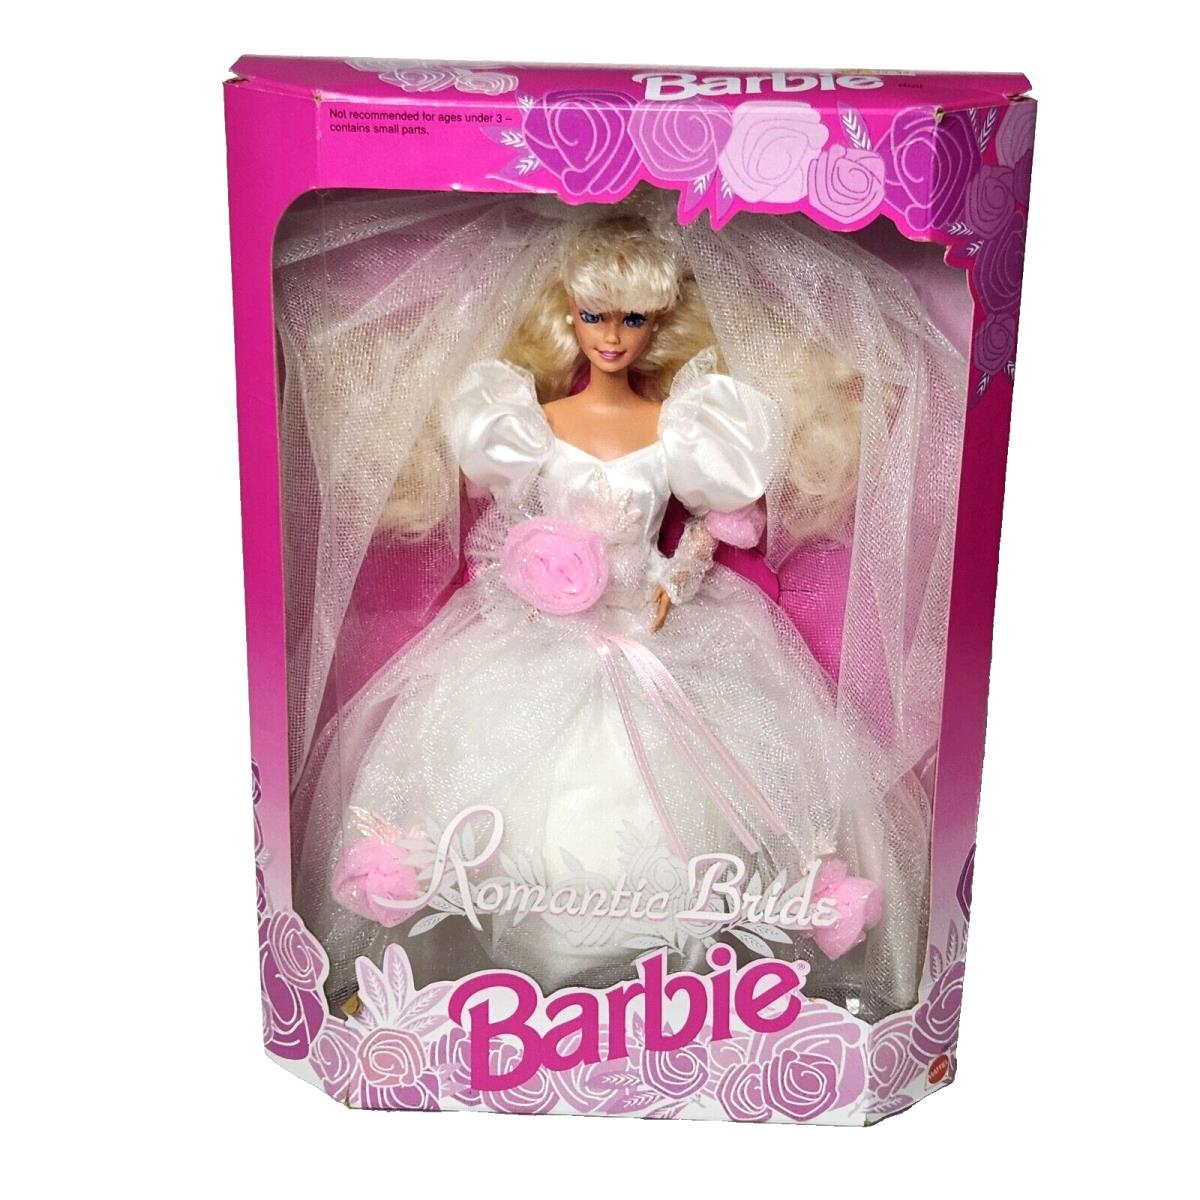 Vintage 1992 Romantic Bride Barbie Doll Mattel Box 1861 White